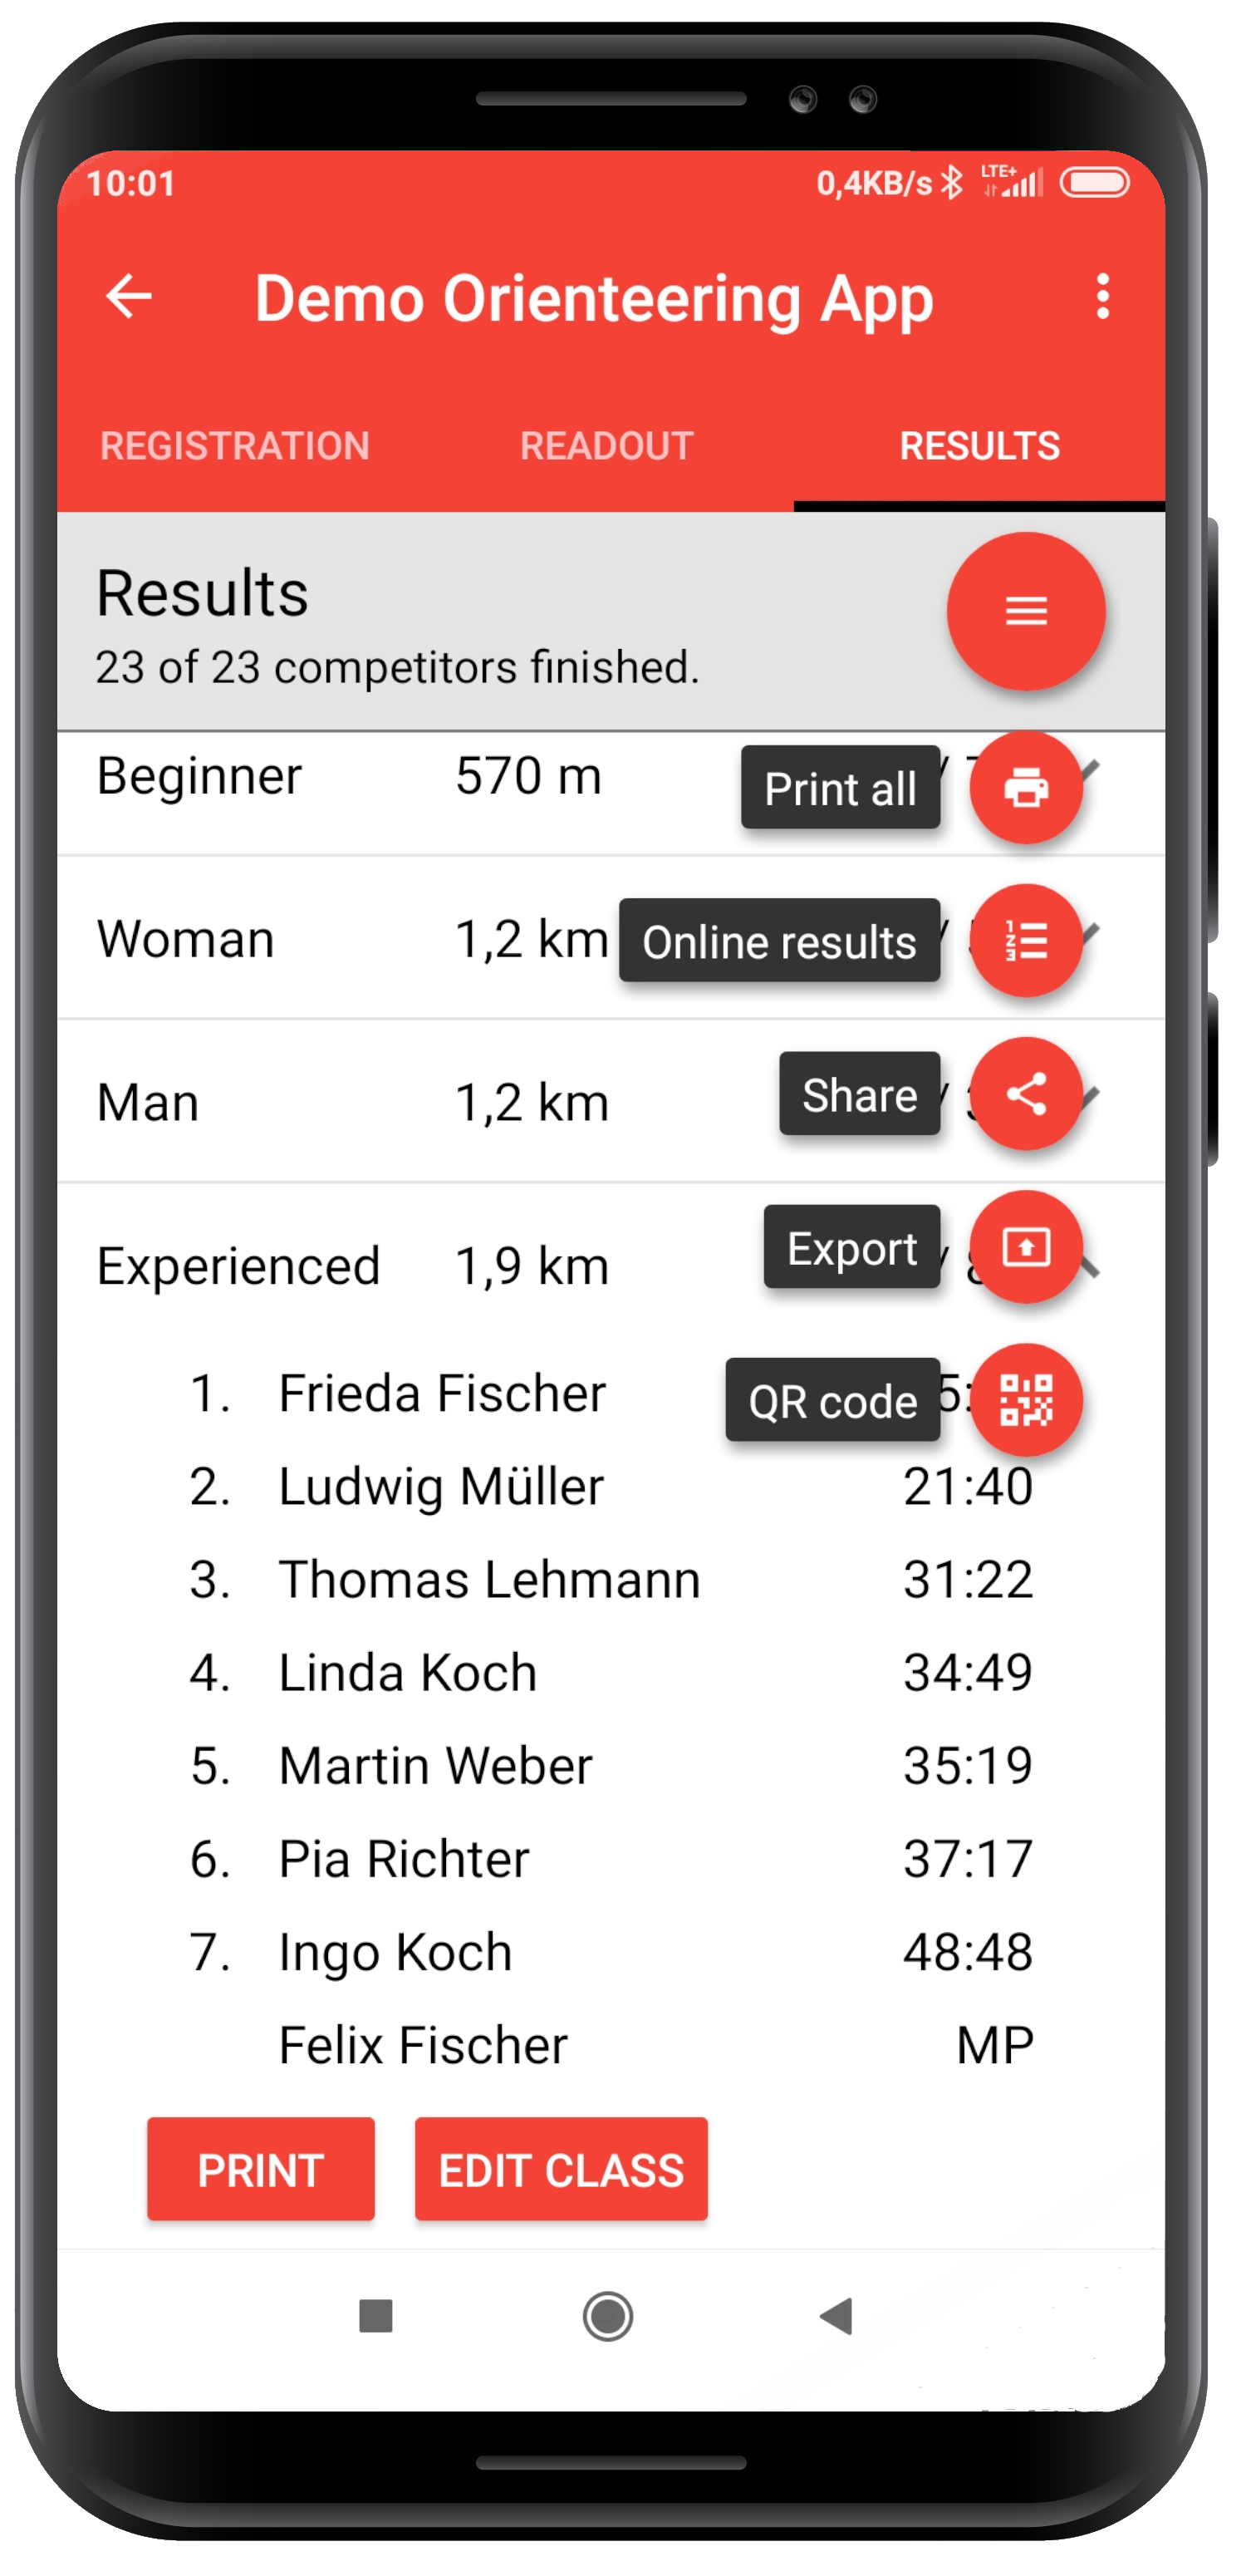 SPORTident Orienteering App: View results